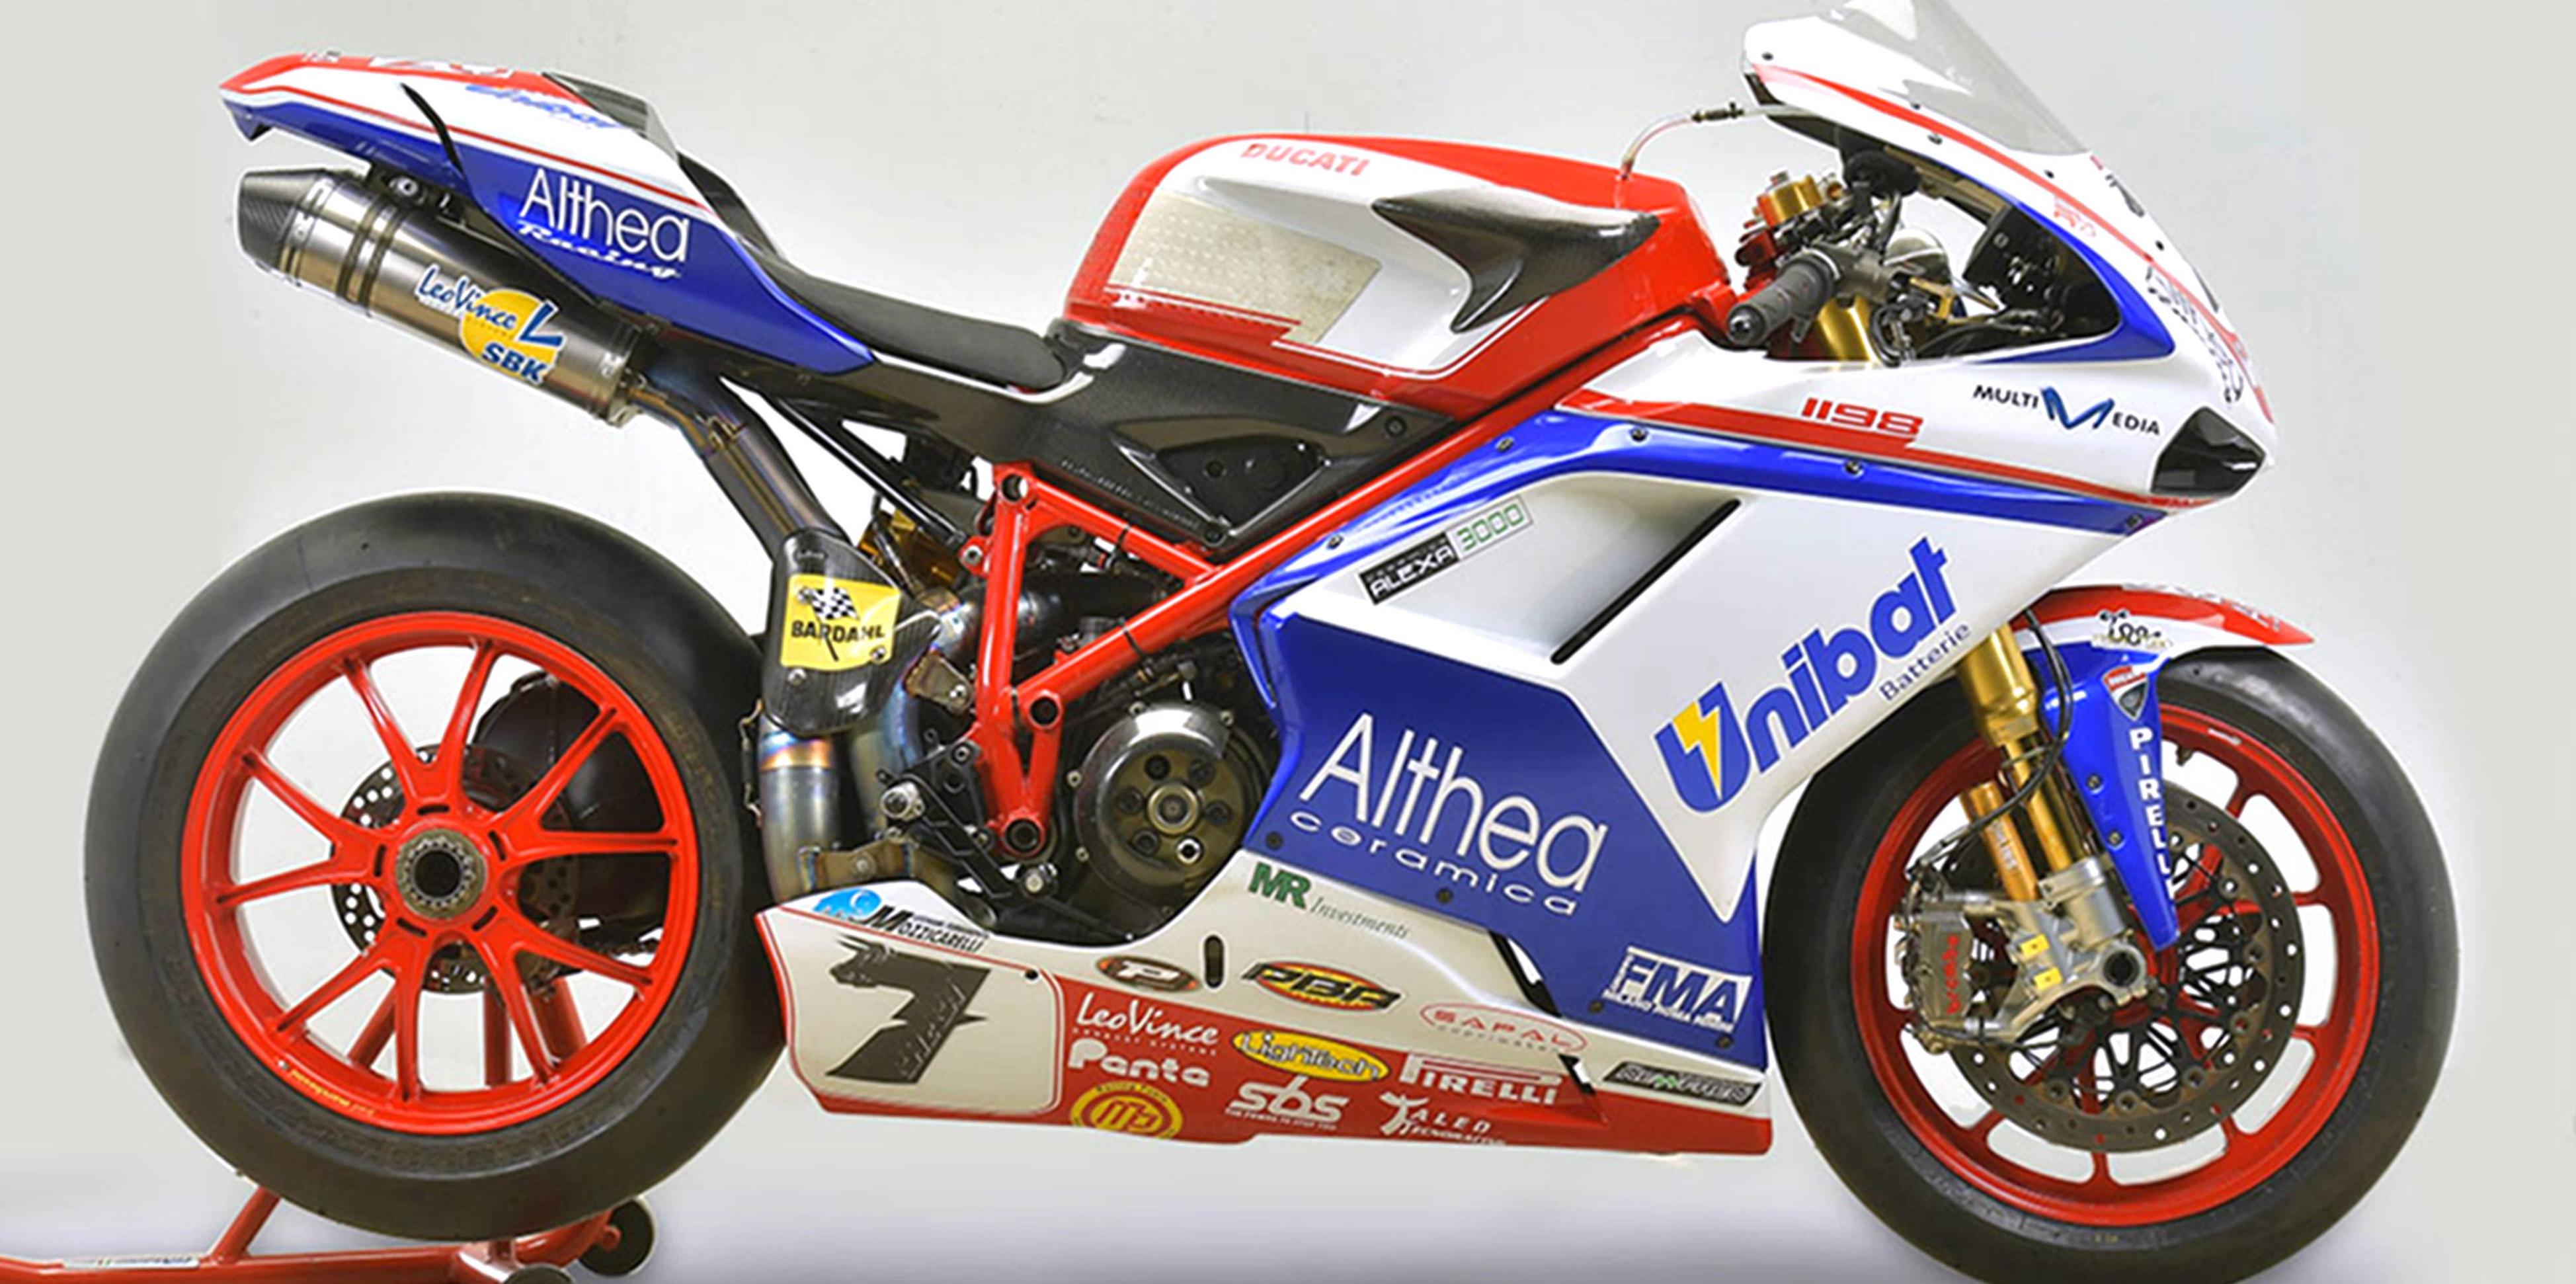 The ex-Carlos Checa, Althea Racing, World Superbike, 2010  Ducati  1098R